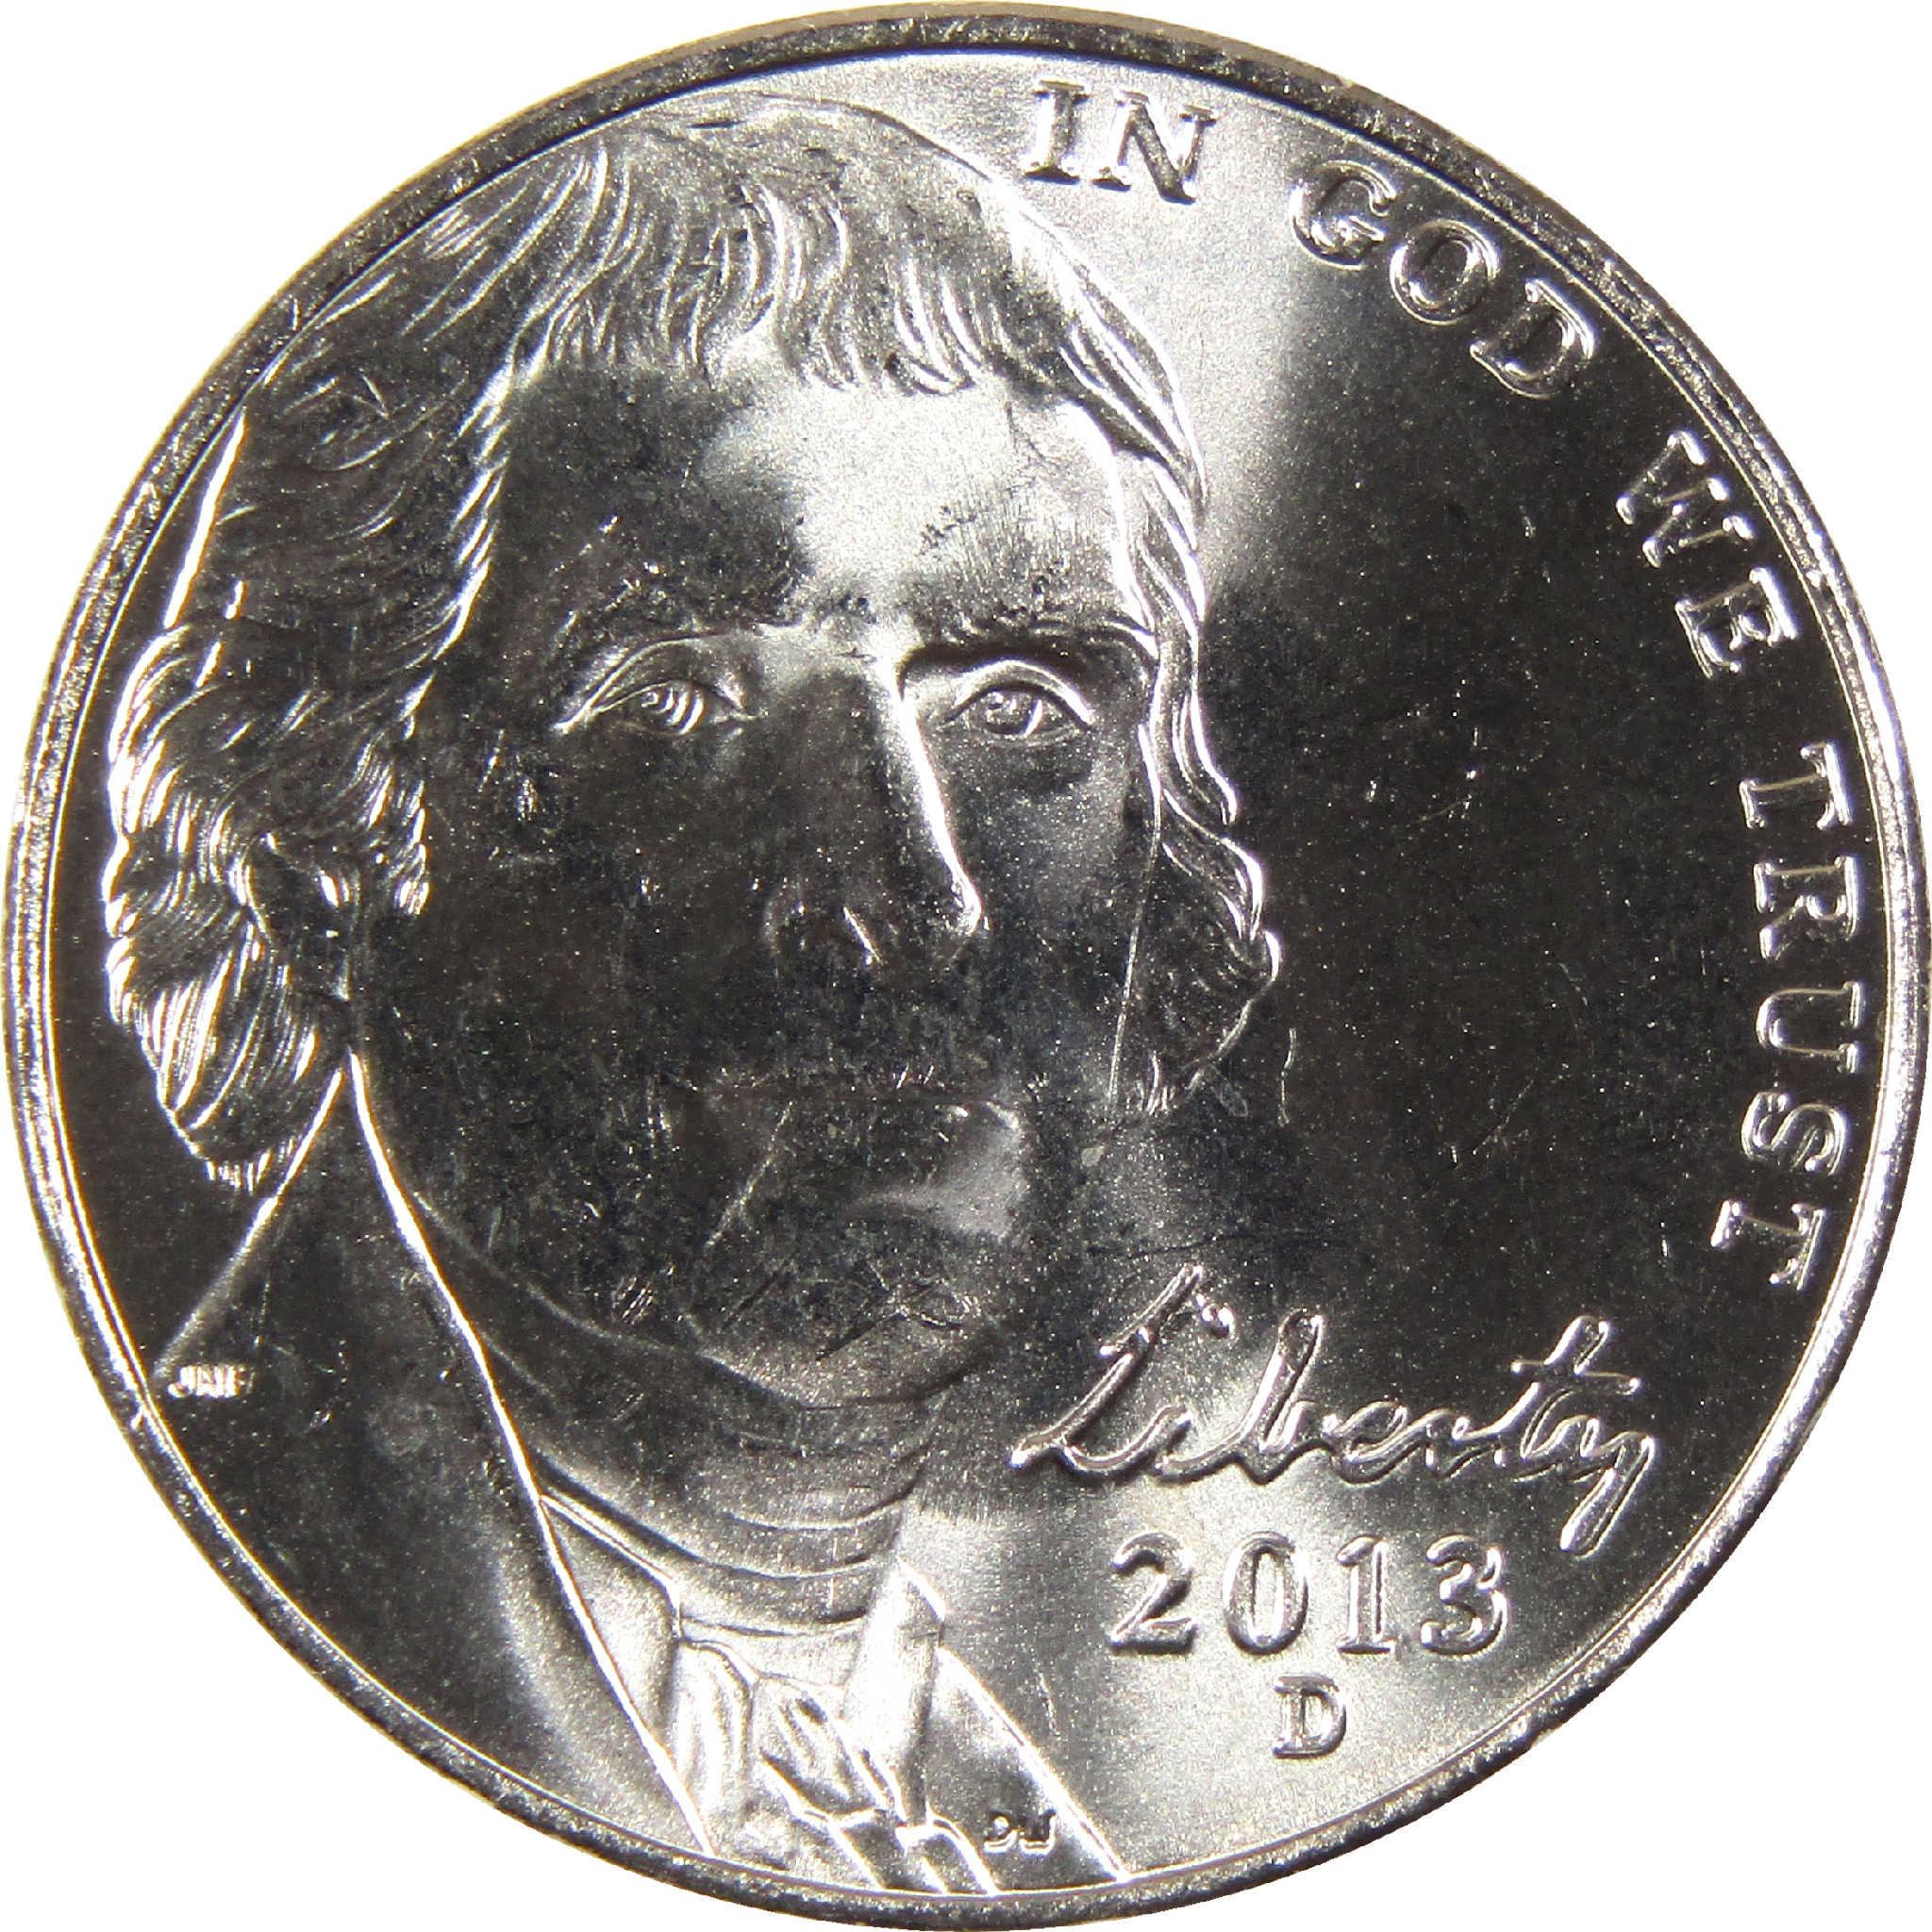 2013 D Jefferson Nickel BU Uncirculated 5c Coin